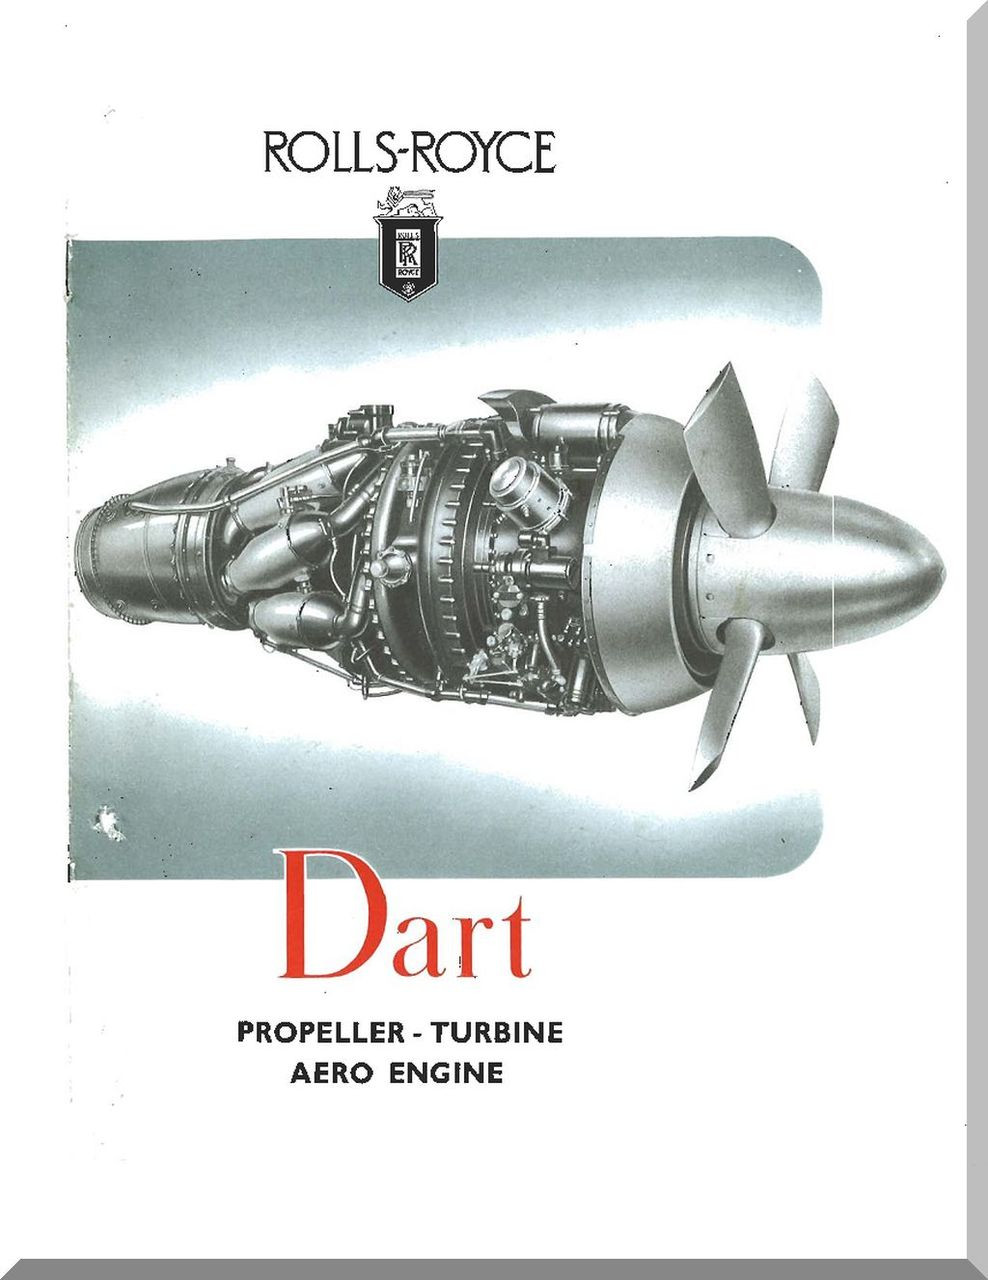 Rolls Royce Dart Aircraft Engine Brochure Manual - Aircraft Reports -  Aircraft Manuals - Aircraft Helicopter Engines Propellers Blueprints  Publications